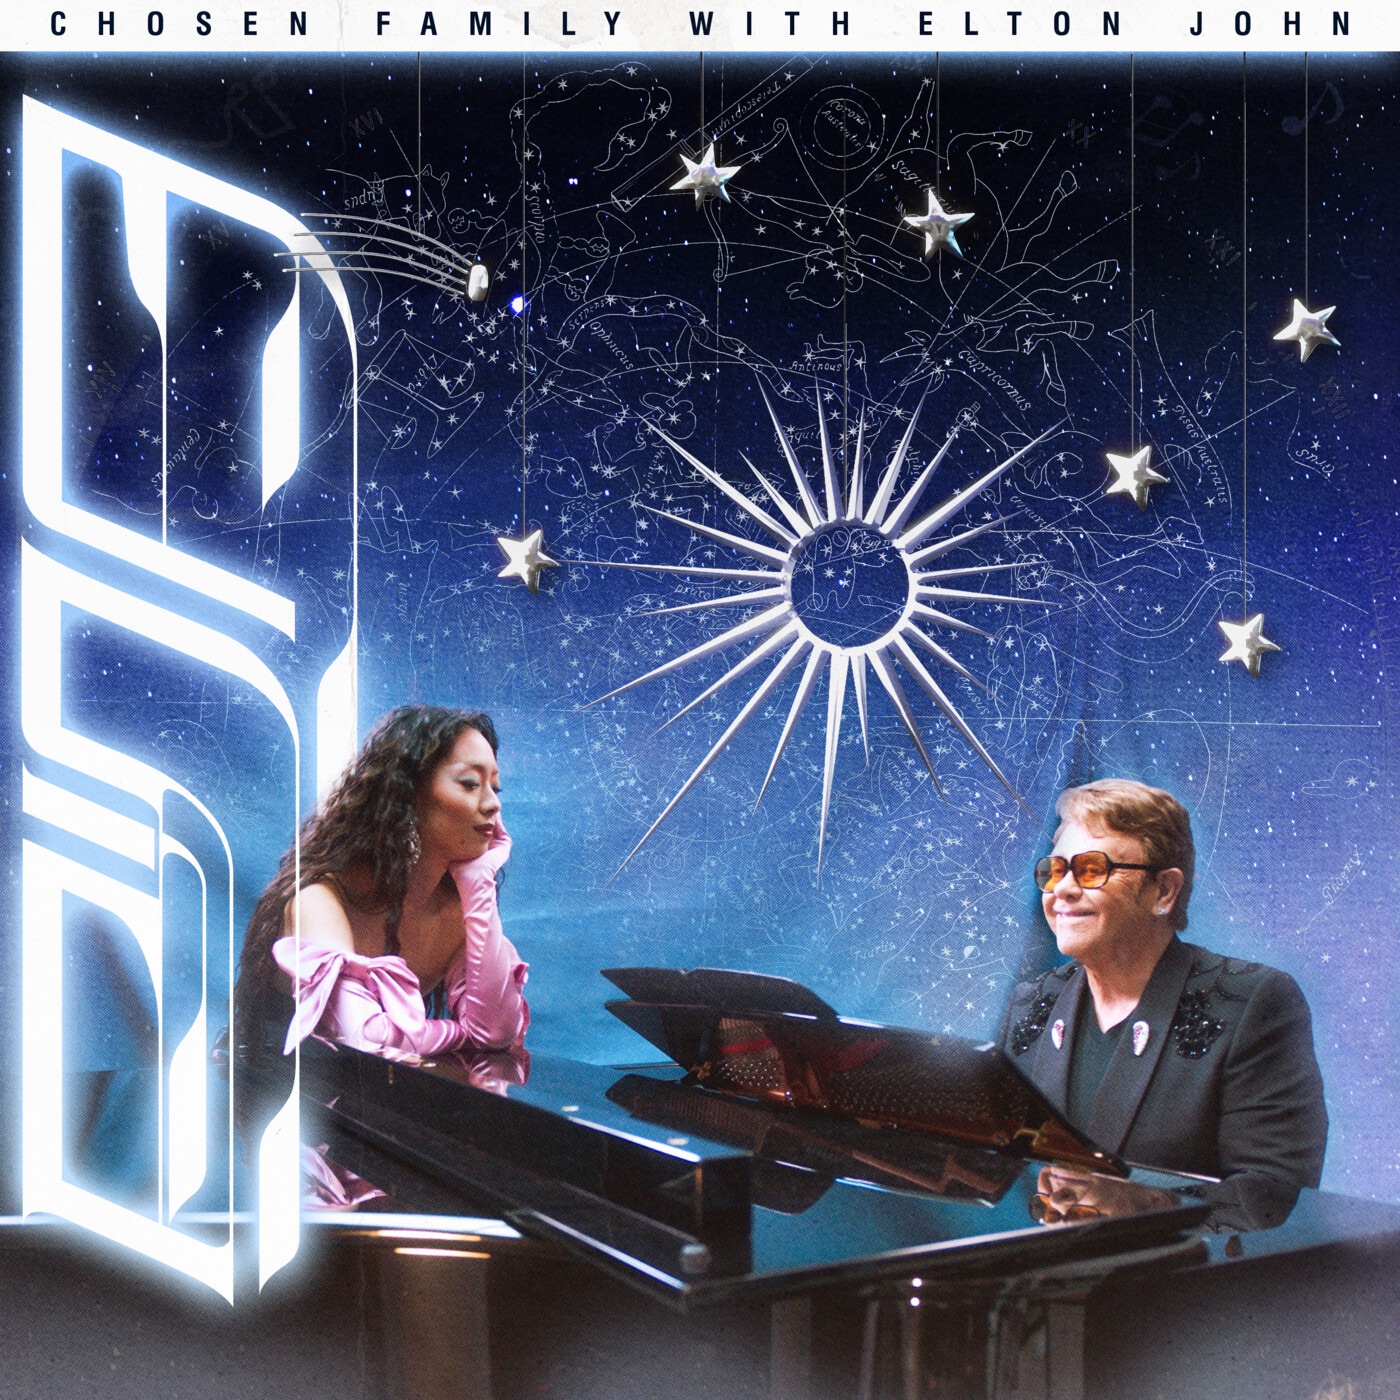 Rina Sawayama & Elton John - Chosen Family - Single